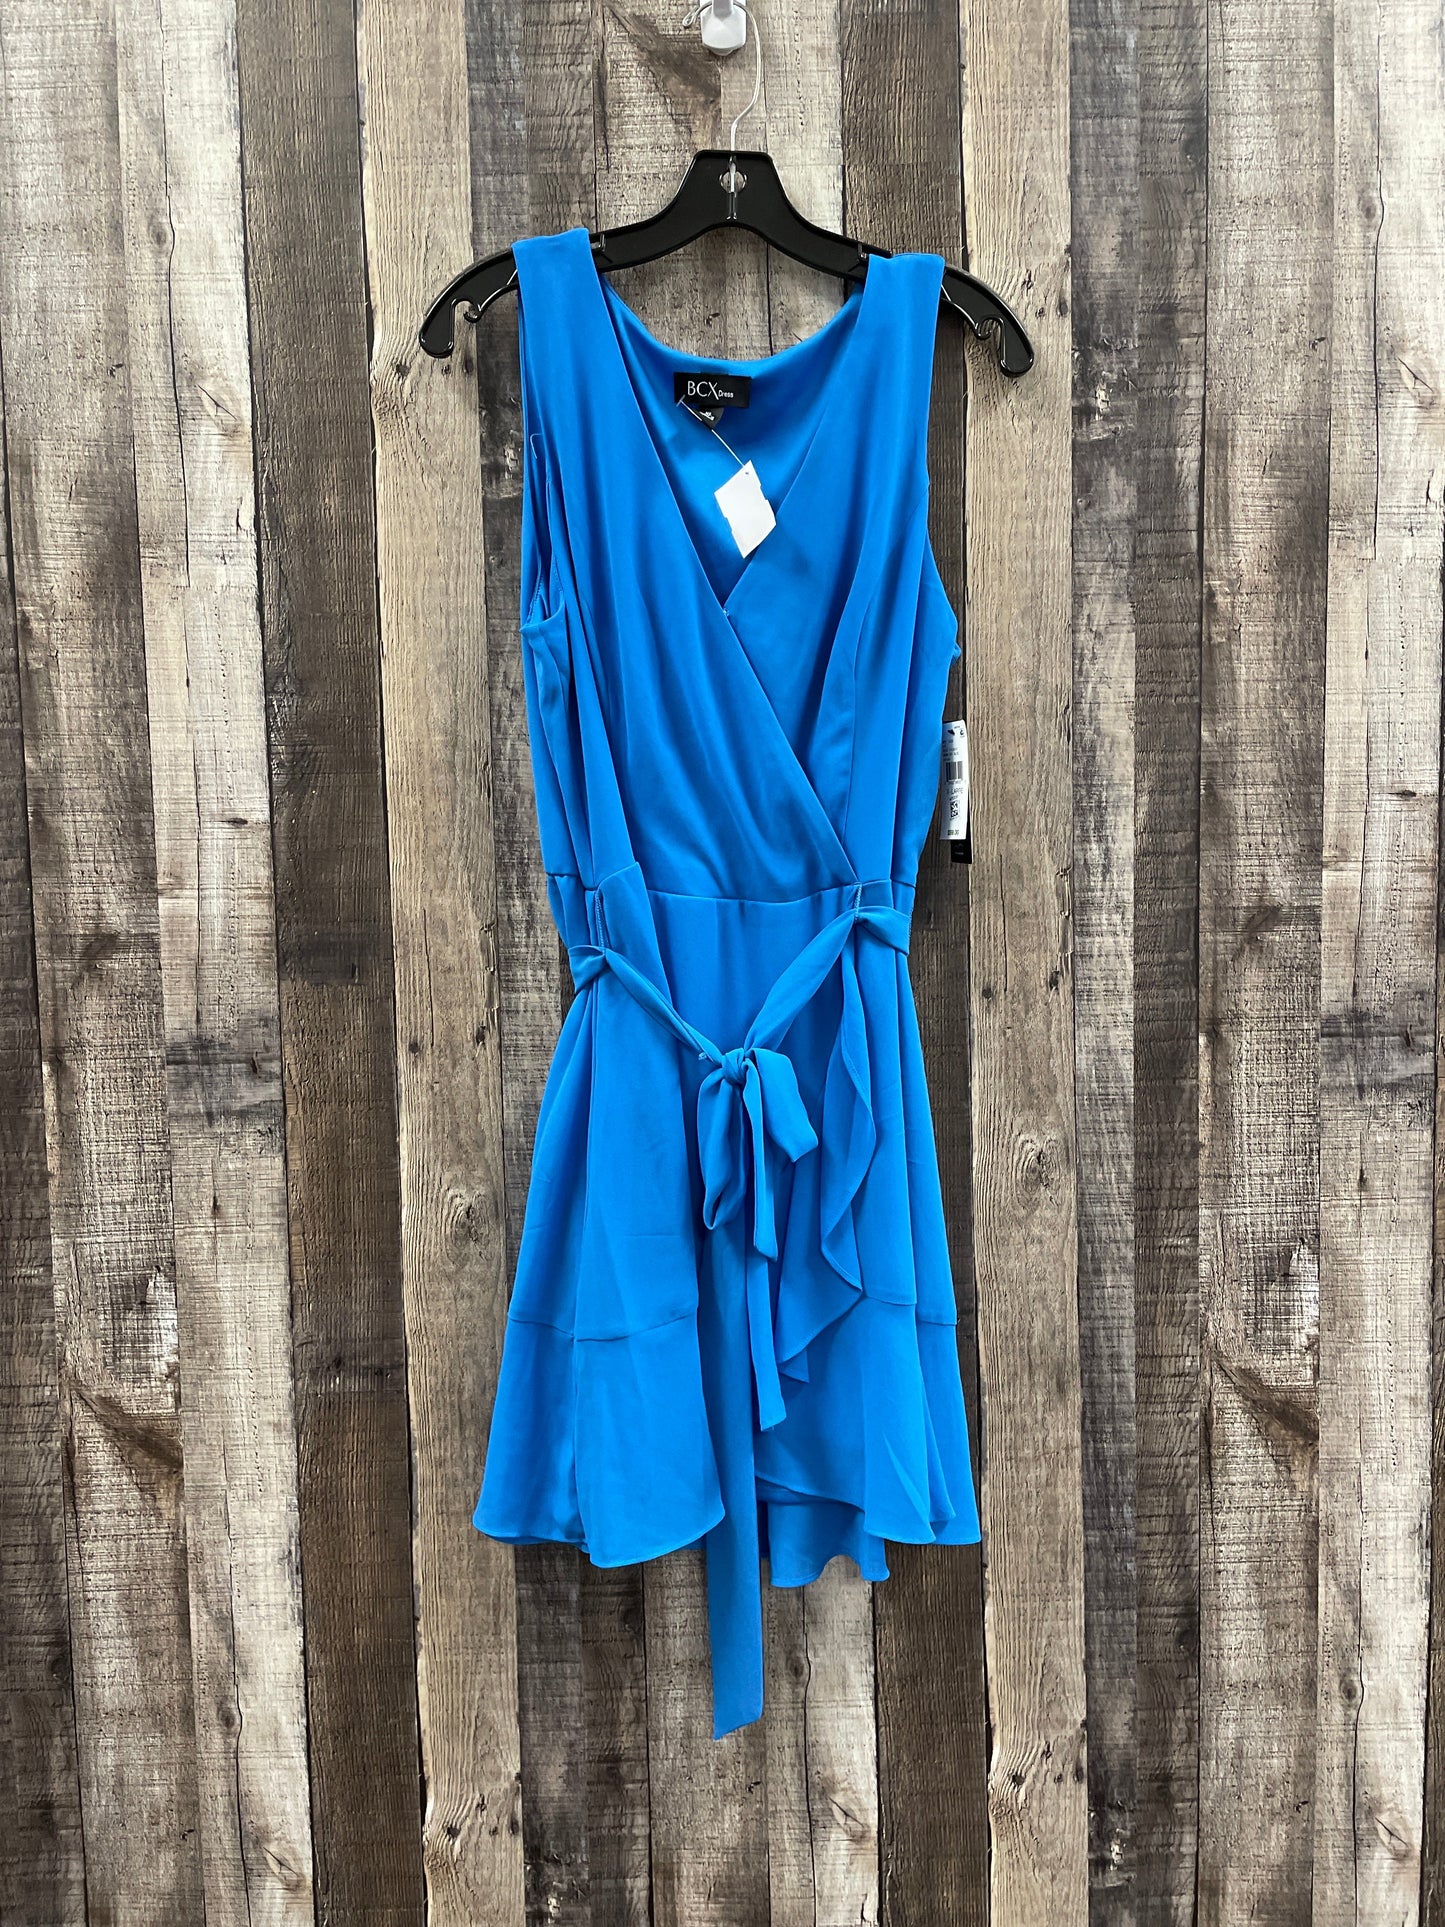 Blue Dress Casual Short Bcx, Size Xl